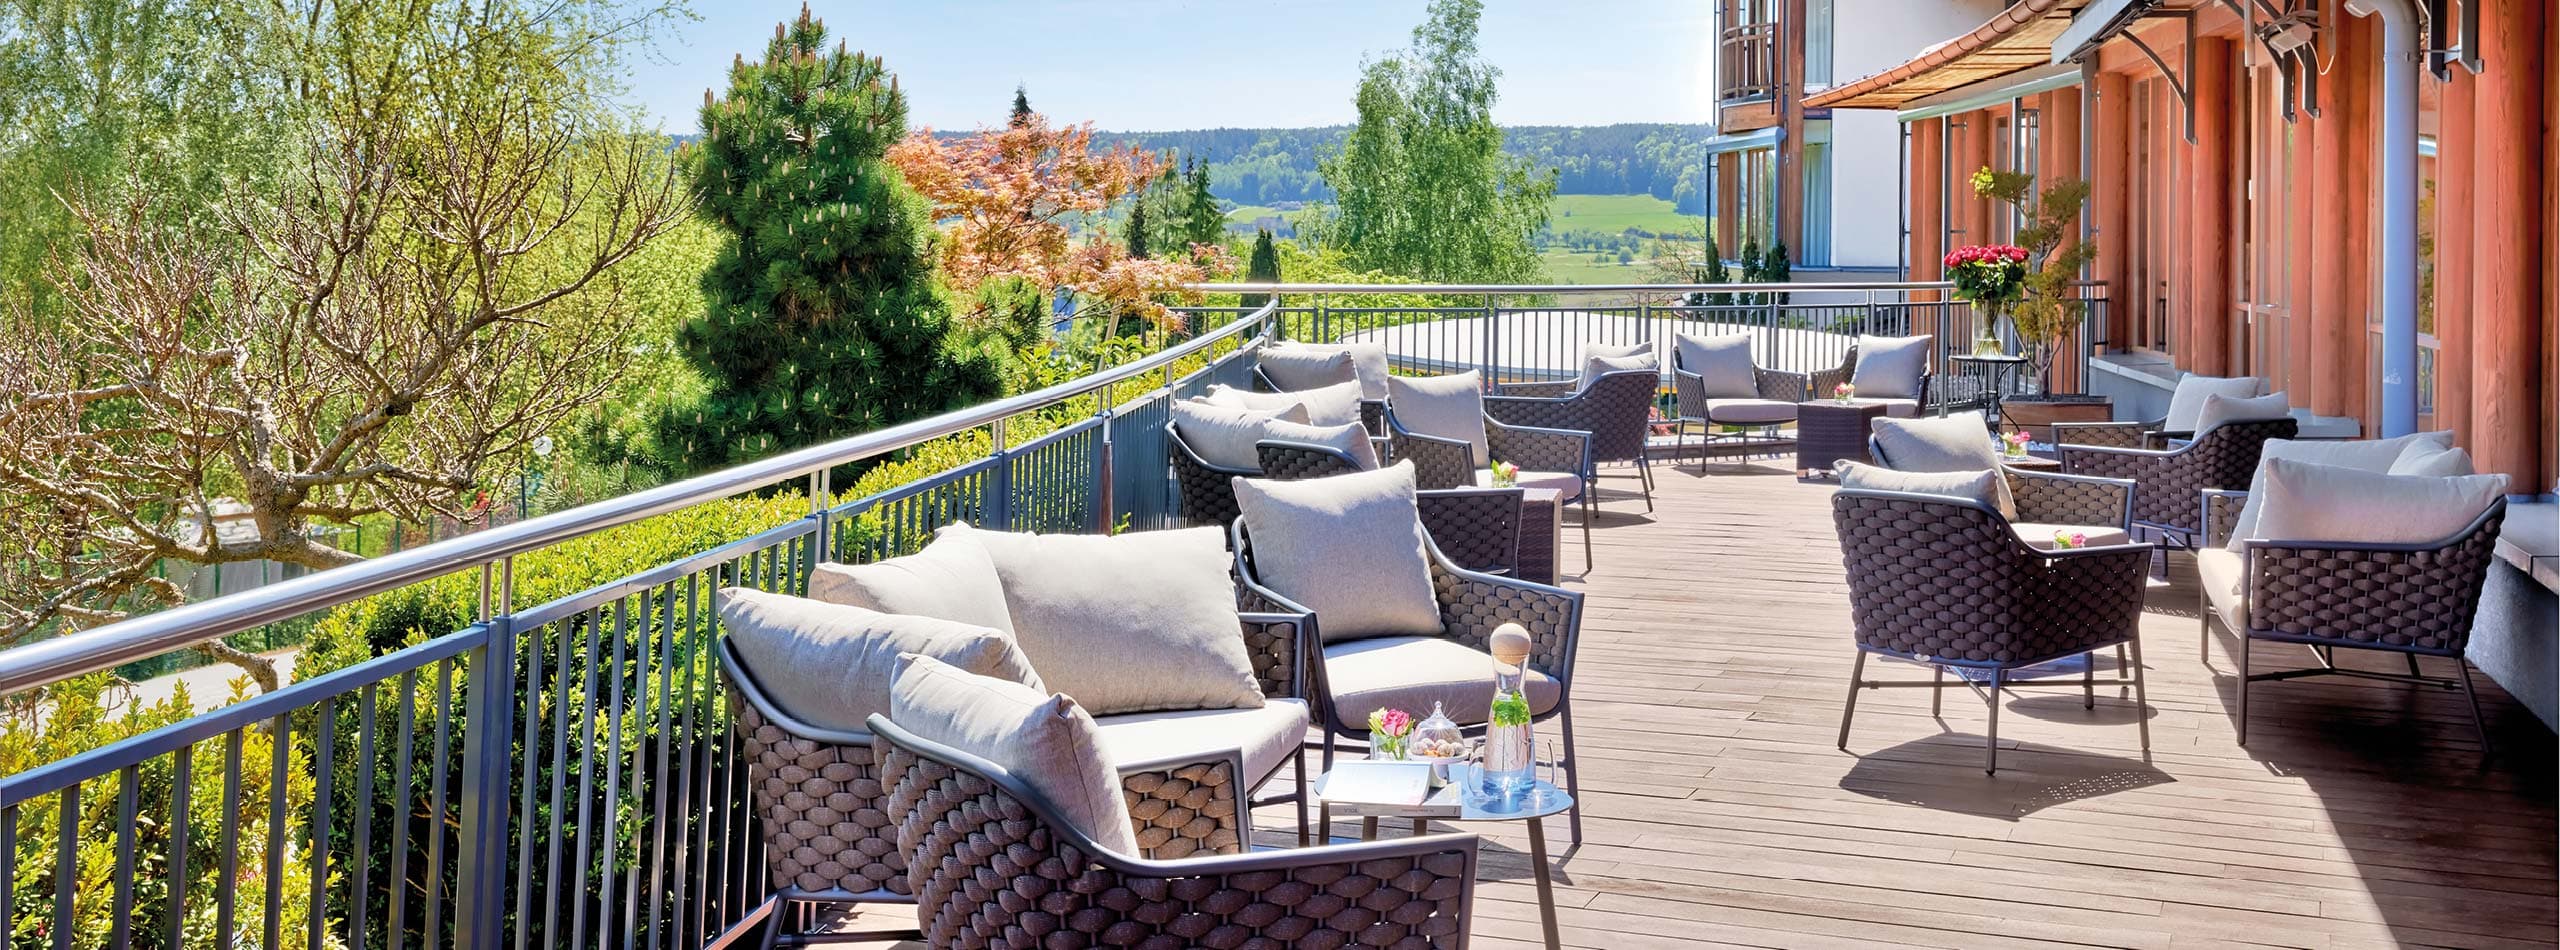 Our hotel in Bad Waltersdorf – the Mandira’s sun terrace